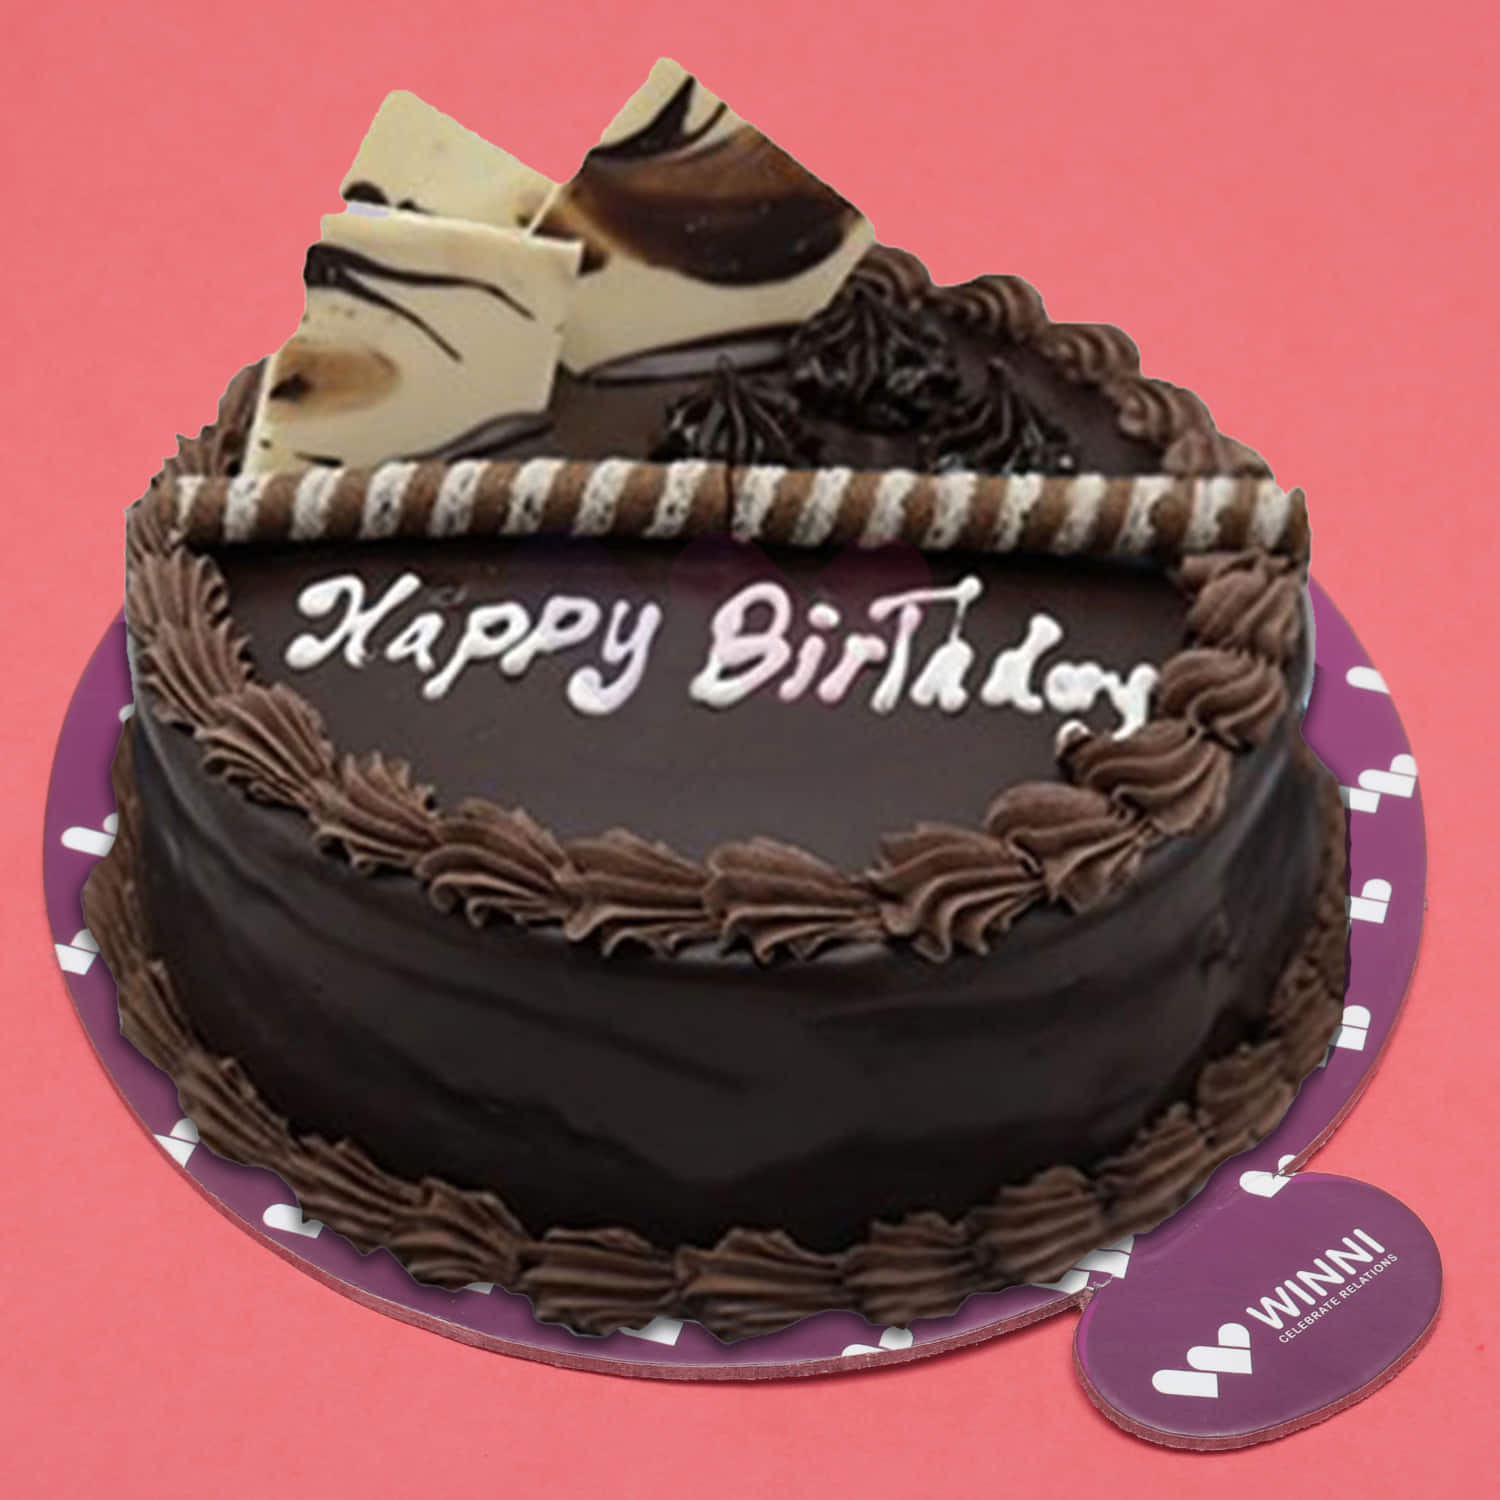 Top 10 Fancy Chocolate Cake Decorating IDeas | Top Yummy Birthday Cake |  Best Cake Tutorials